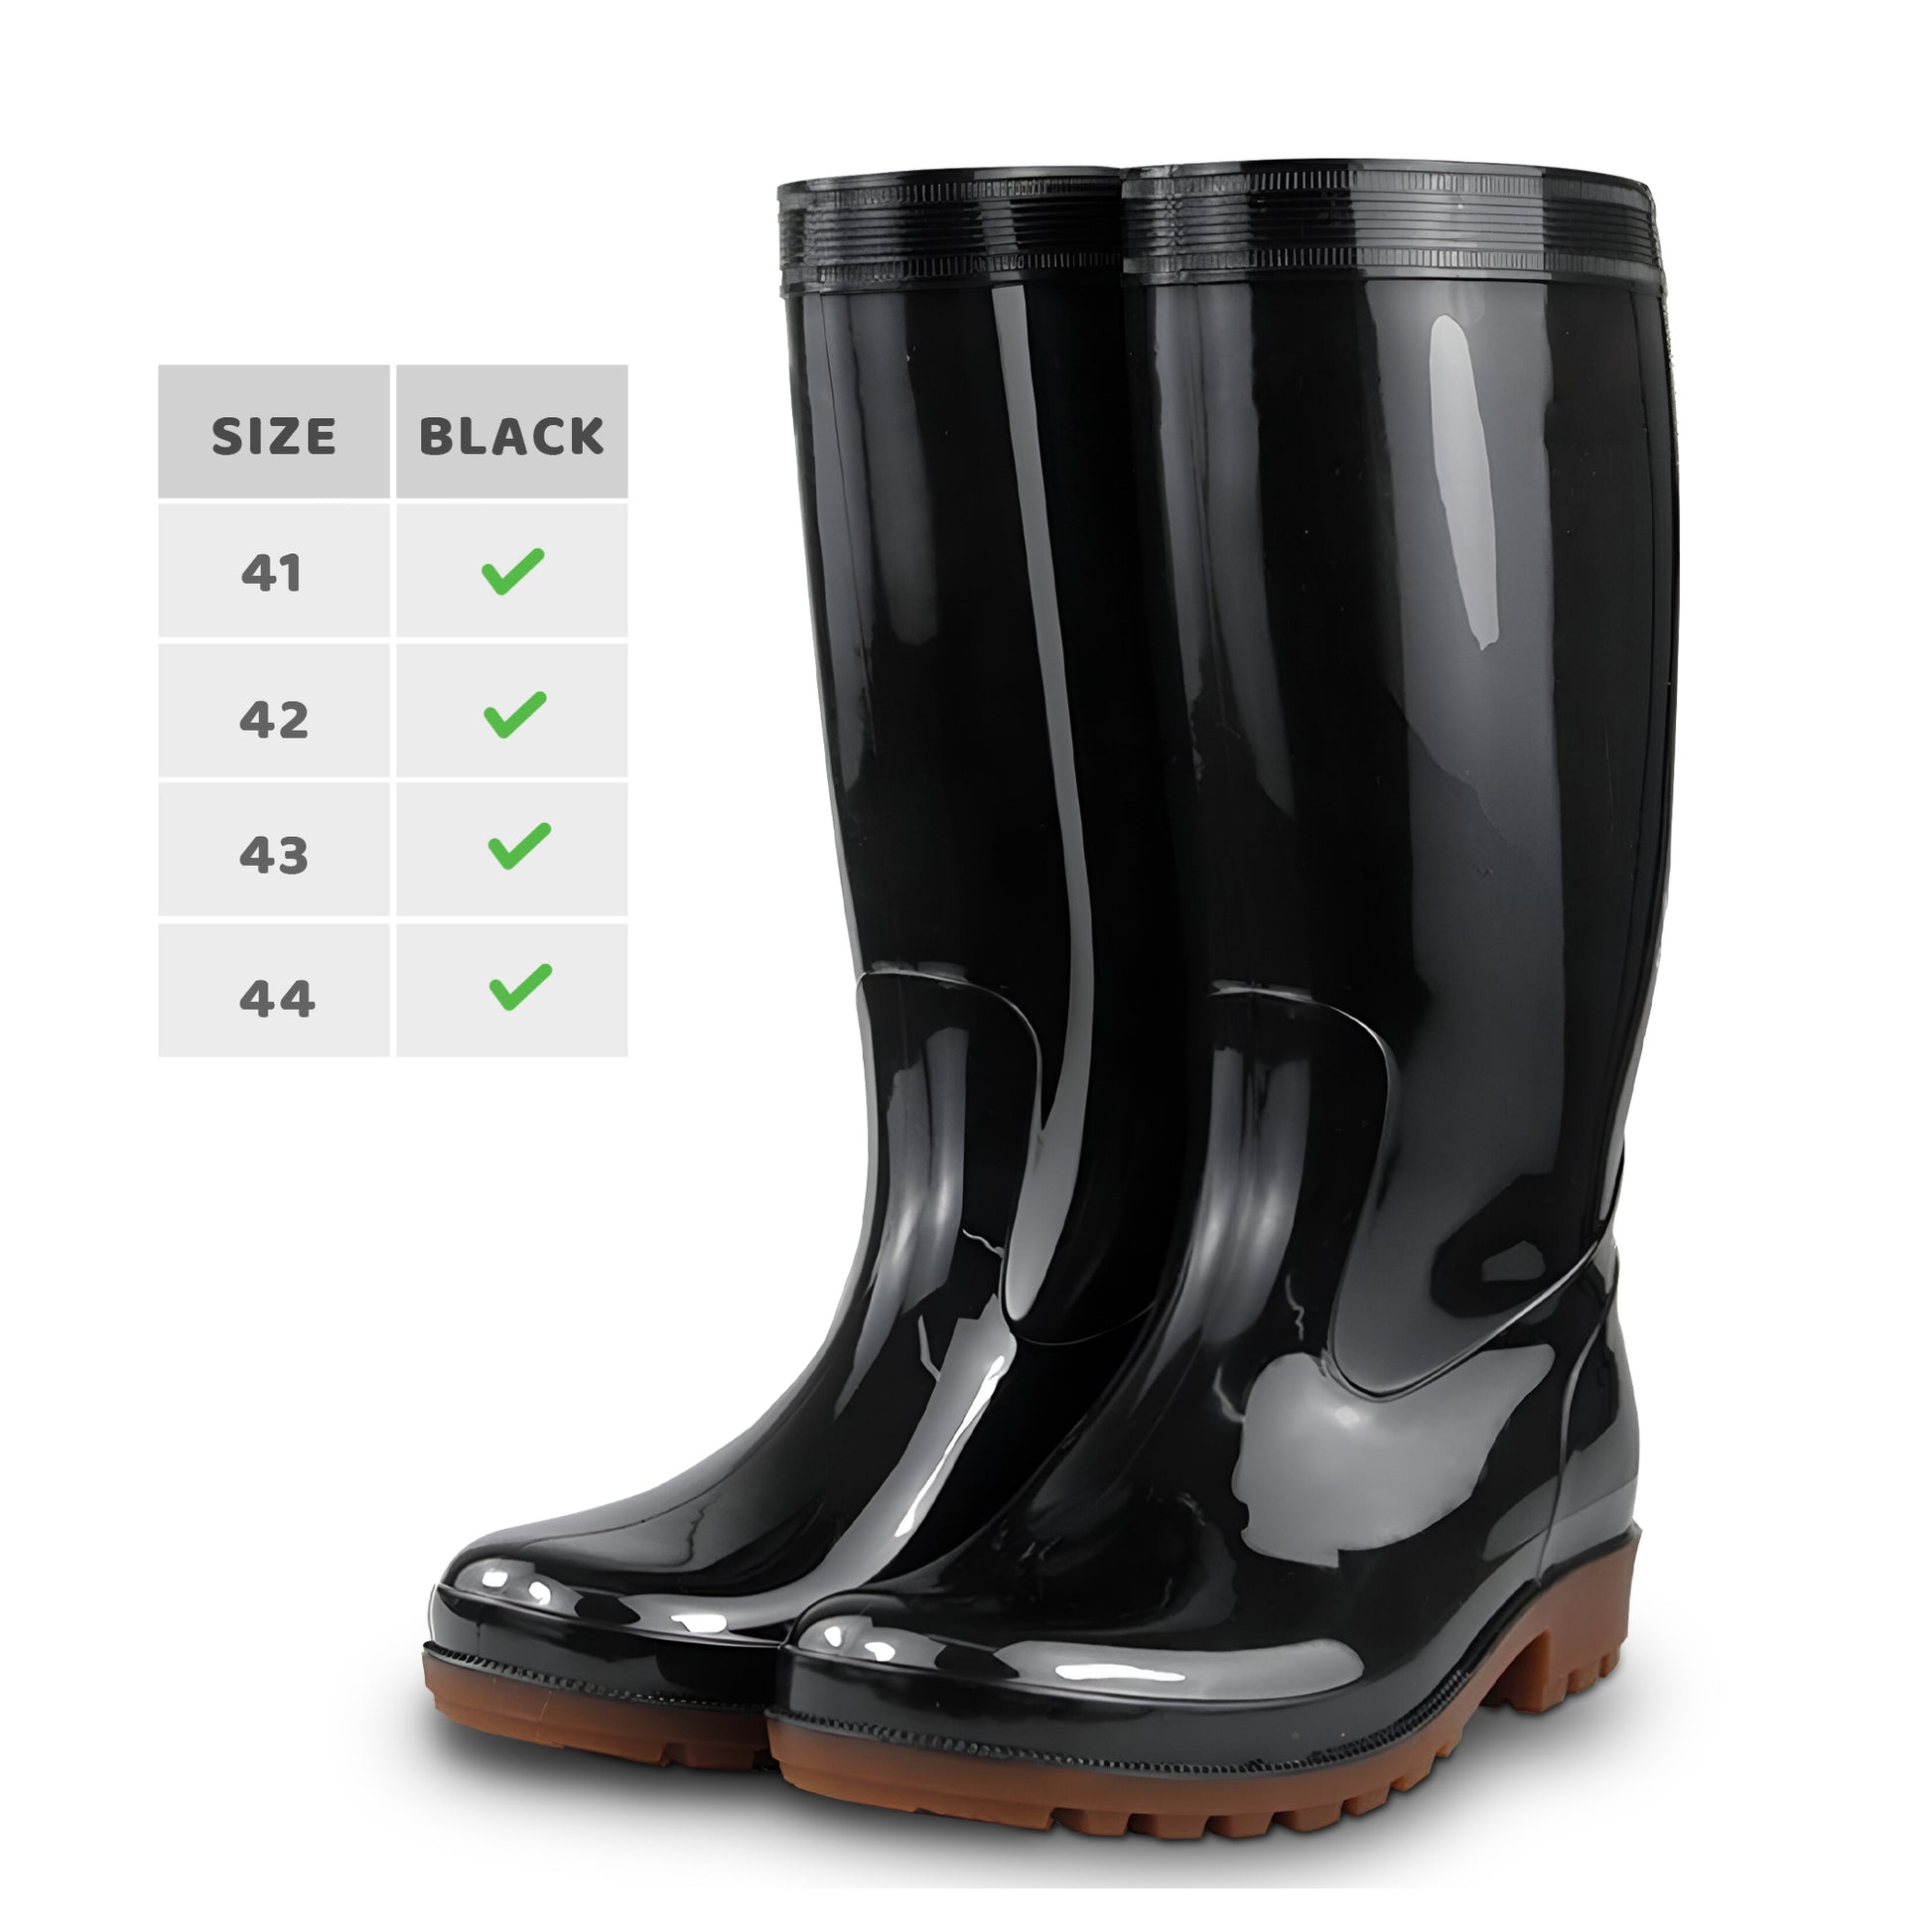 Worker Wellies Rain Waterproof Lightweight Boots Garden Work Shoes -Size Detail Image